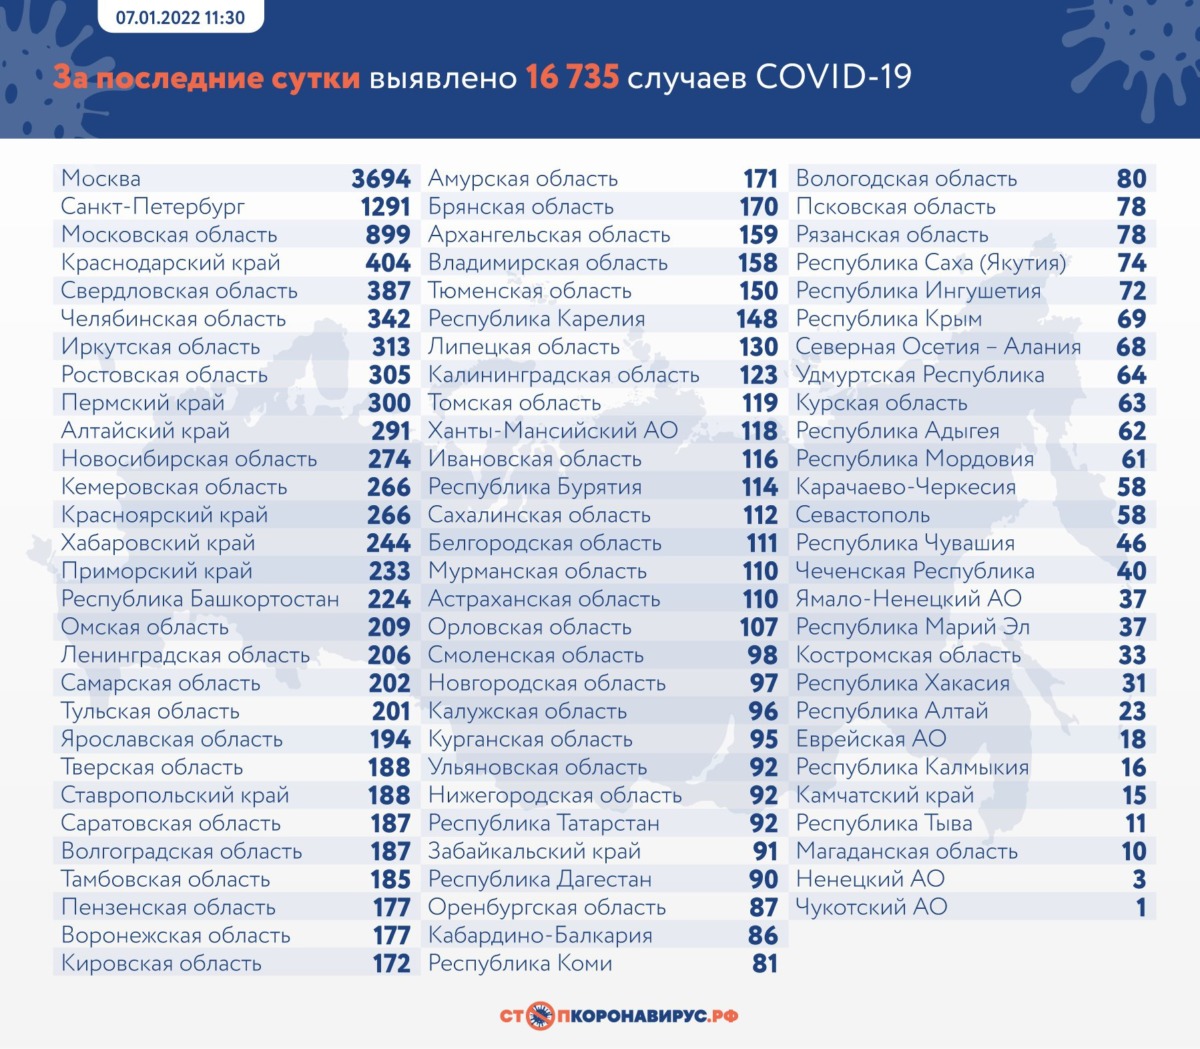 Статистика коронавируса в России на 7 января